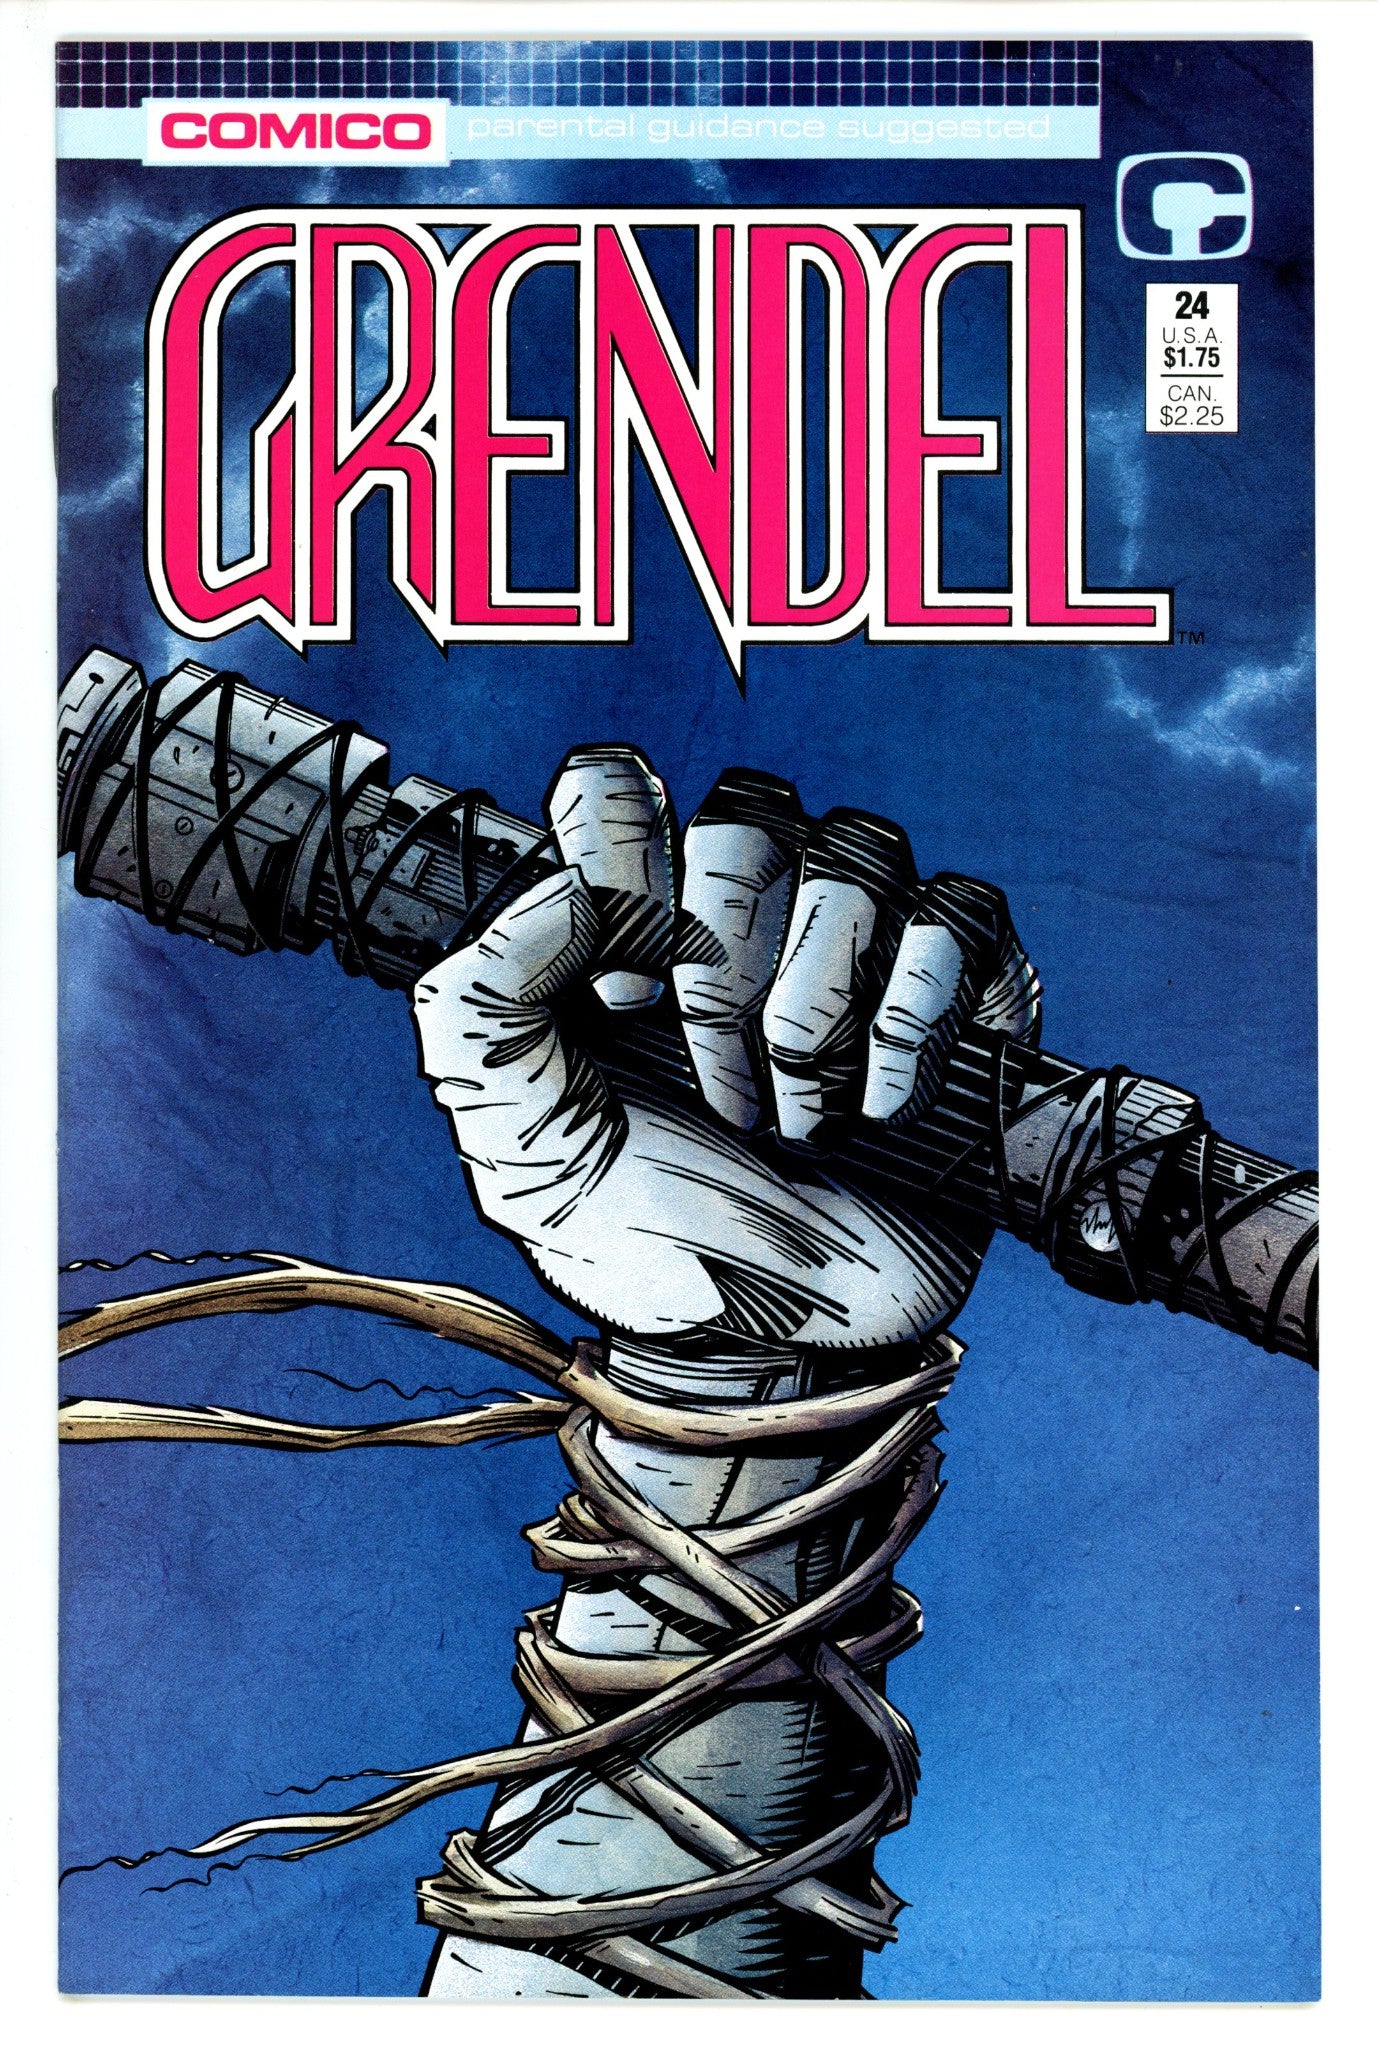 Grendel Vol 2 24 (1988)